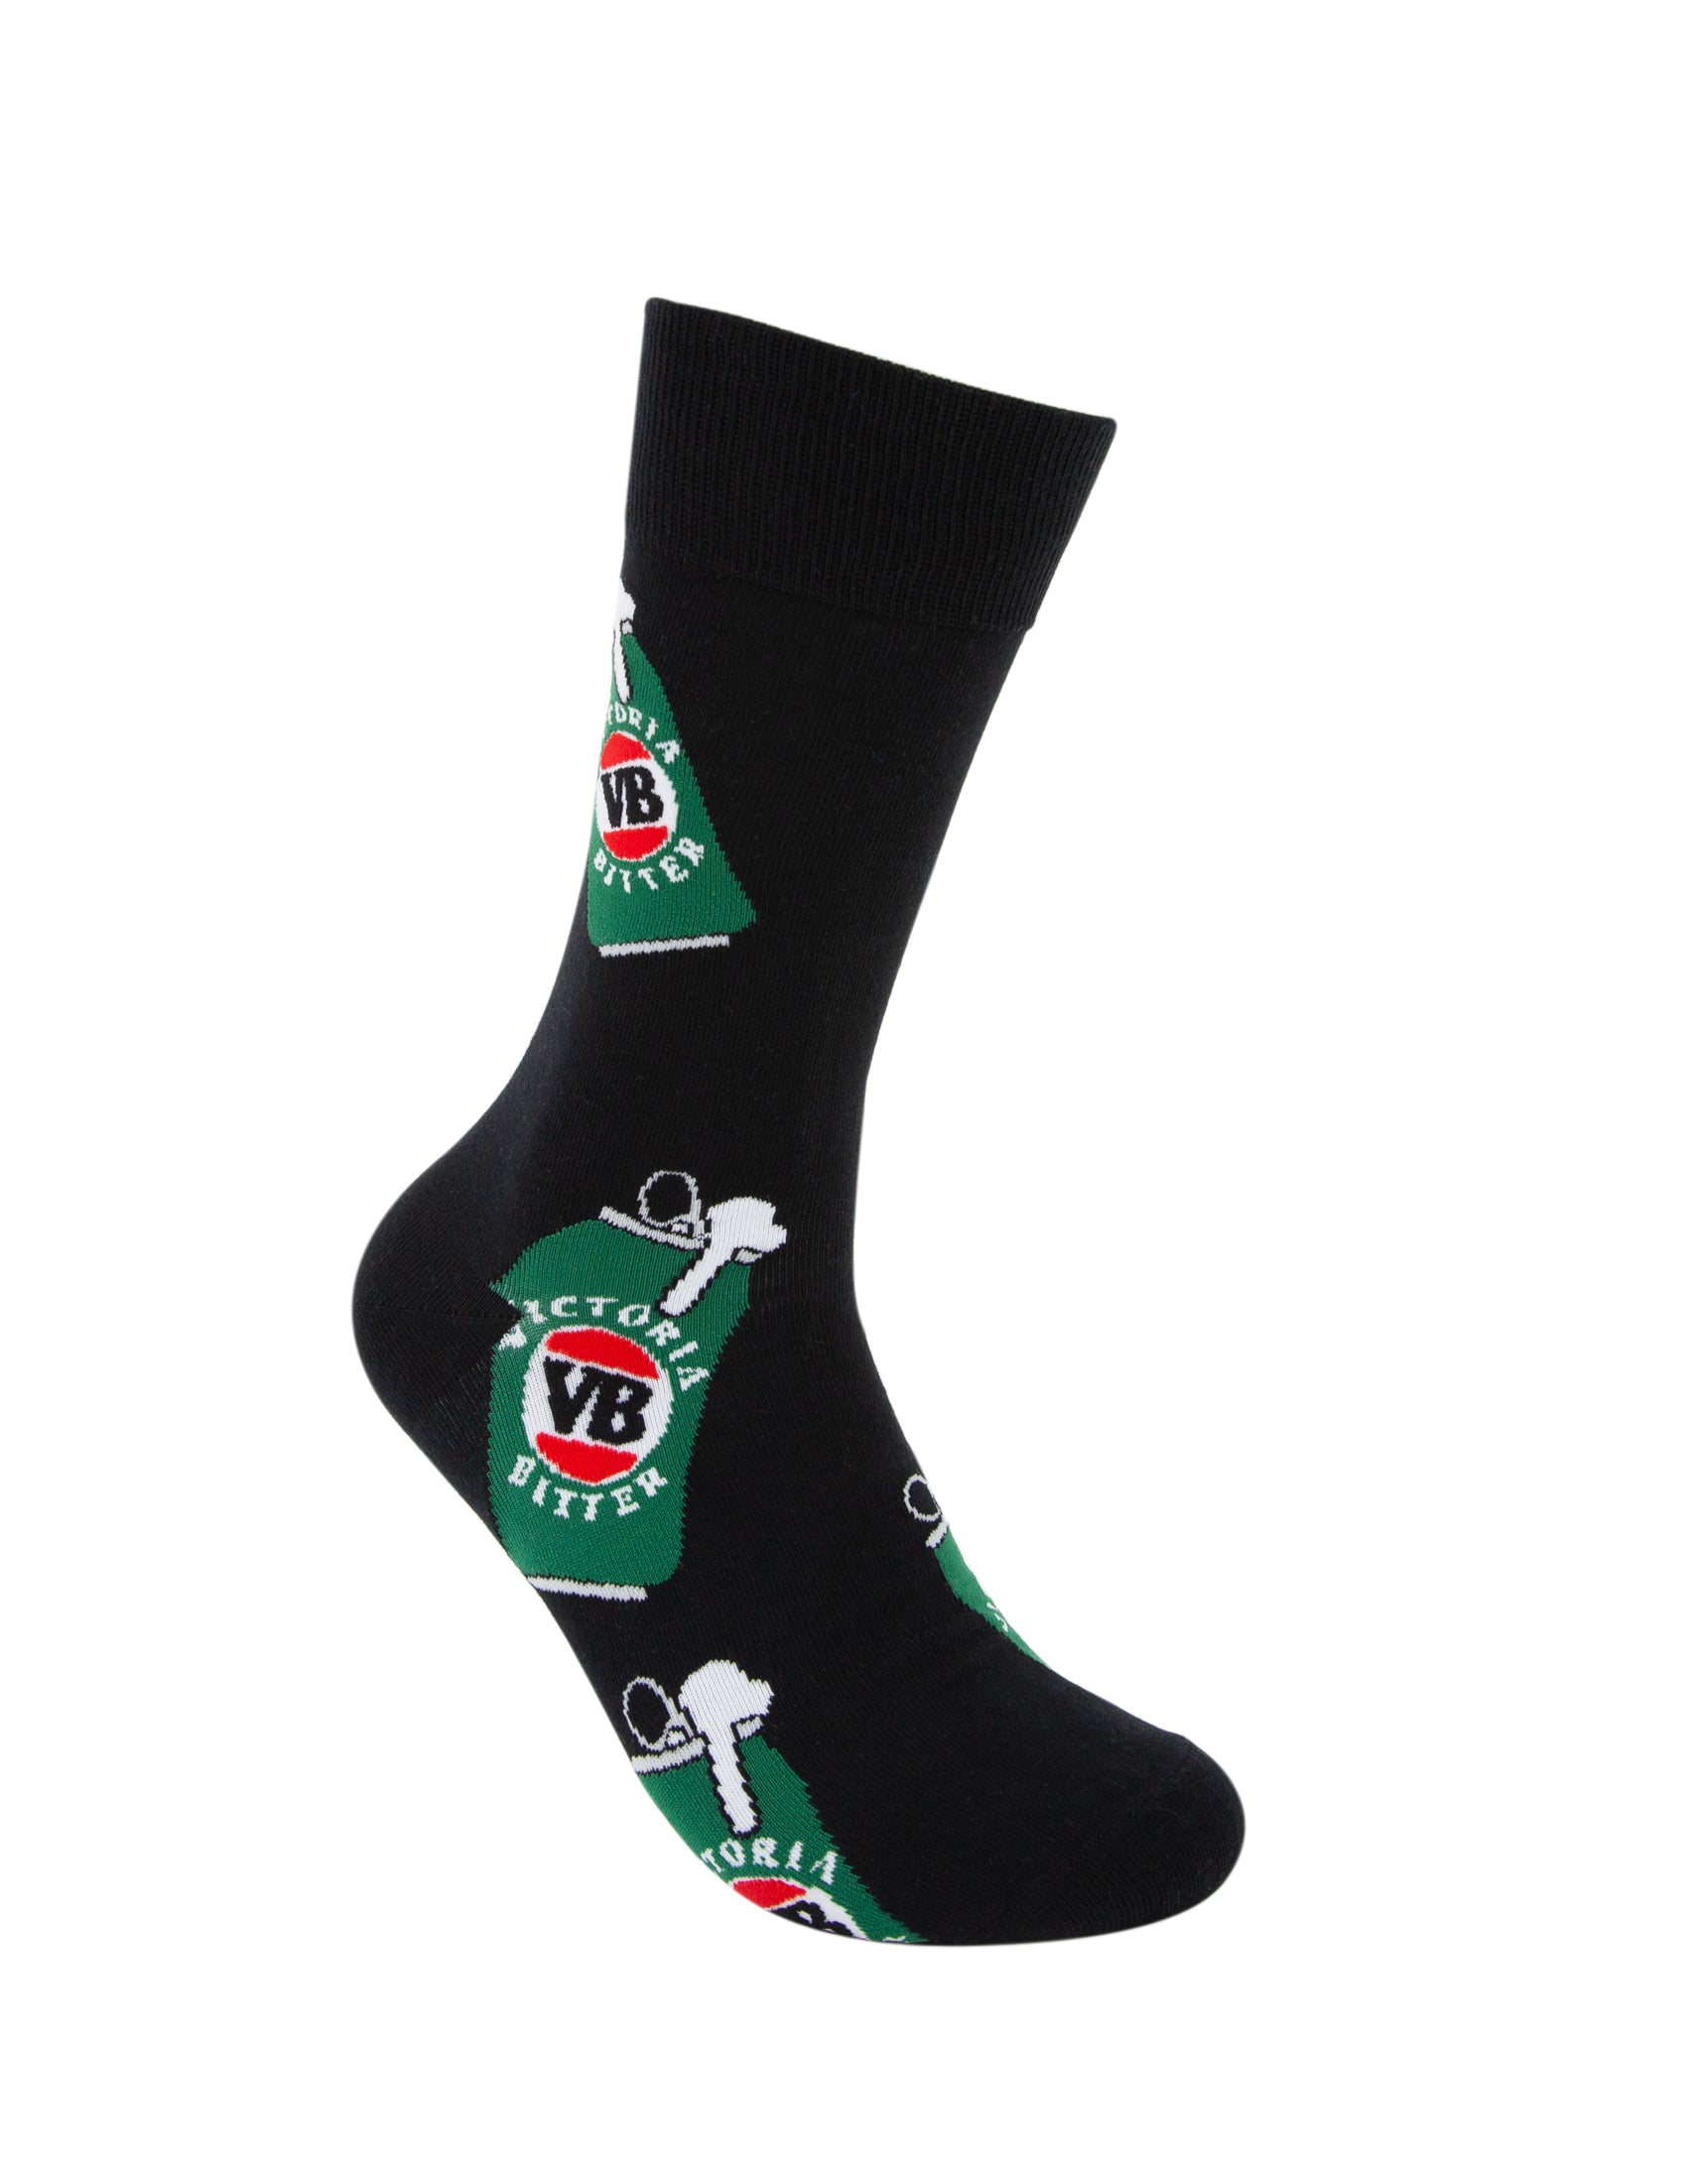 VB Gift Card Organic Cotton Socks